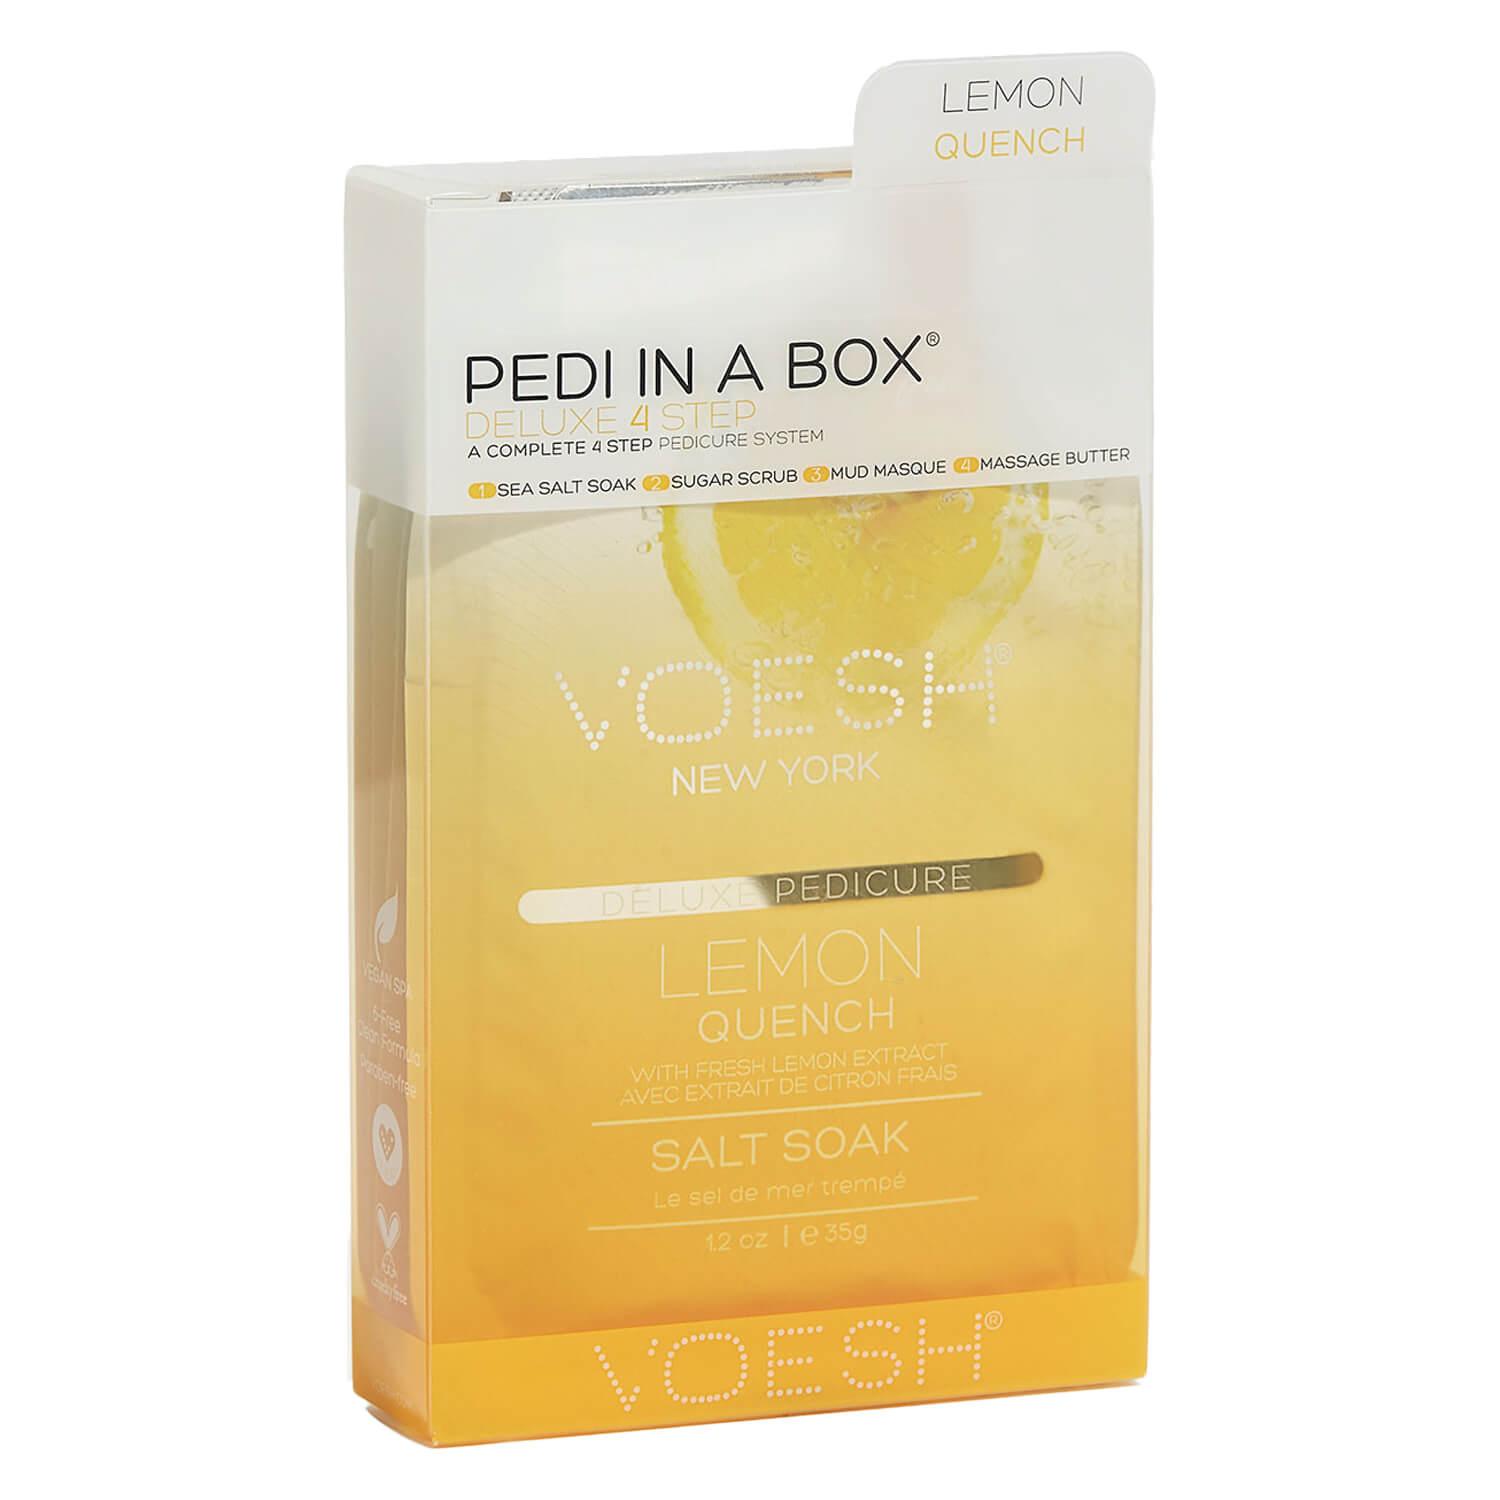 VOESH New York - Pedi In A Box 4 Step Lemon Quench